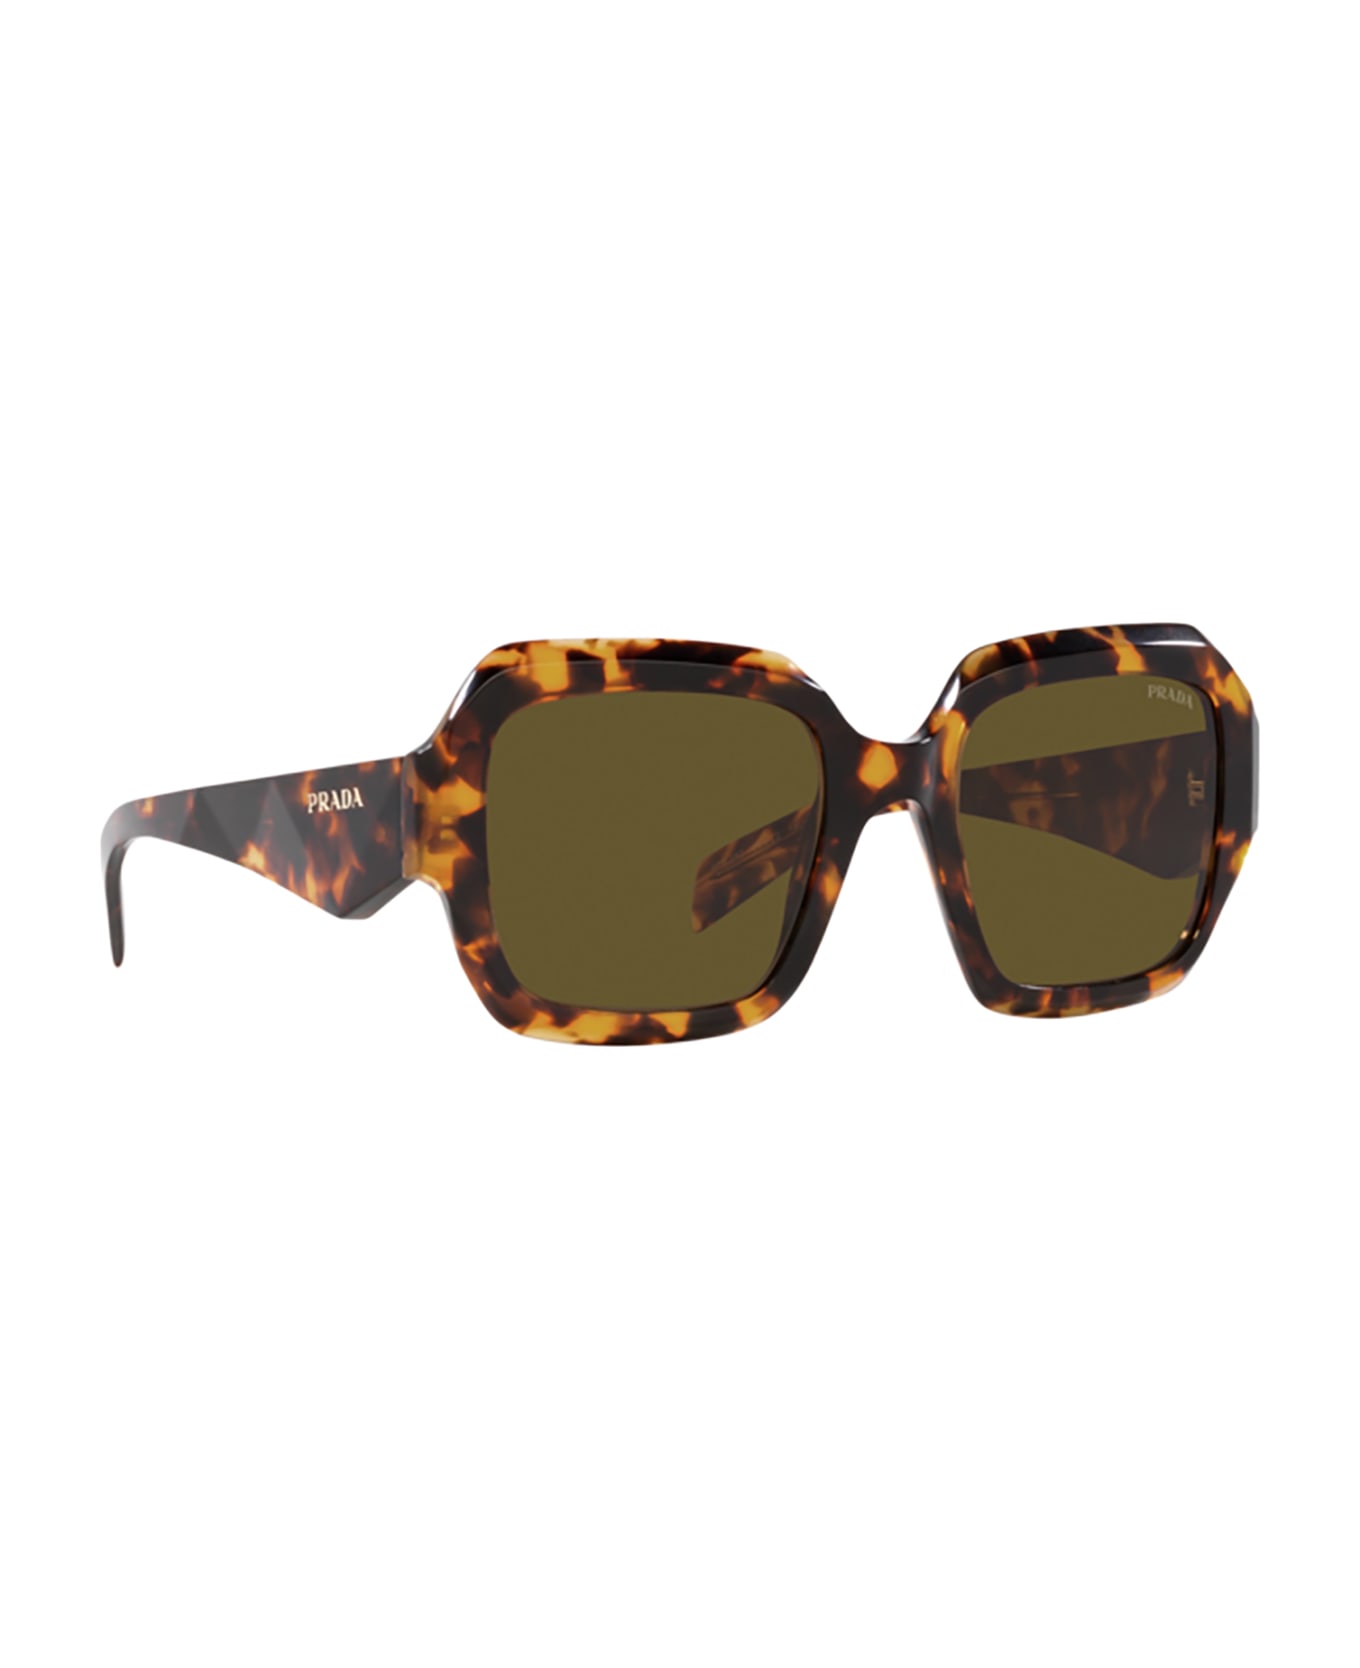 Prada Eyewear Pr 28zs Sage / Honey Tortoise Sunglasses - Sage / Honey Tortoise